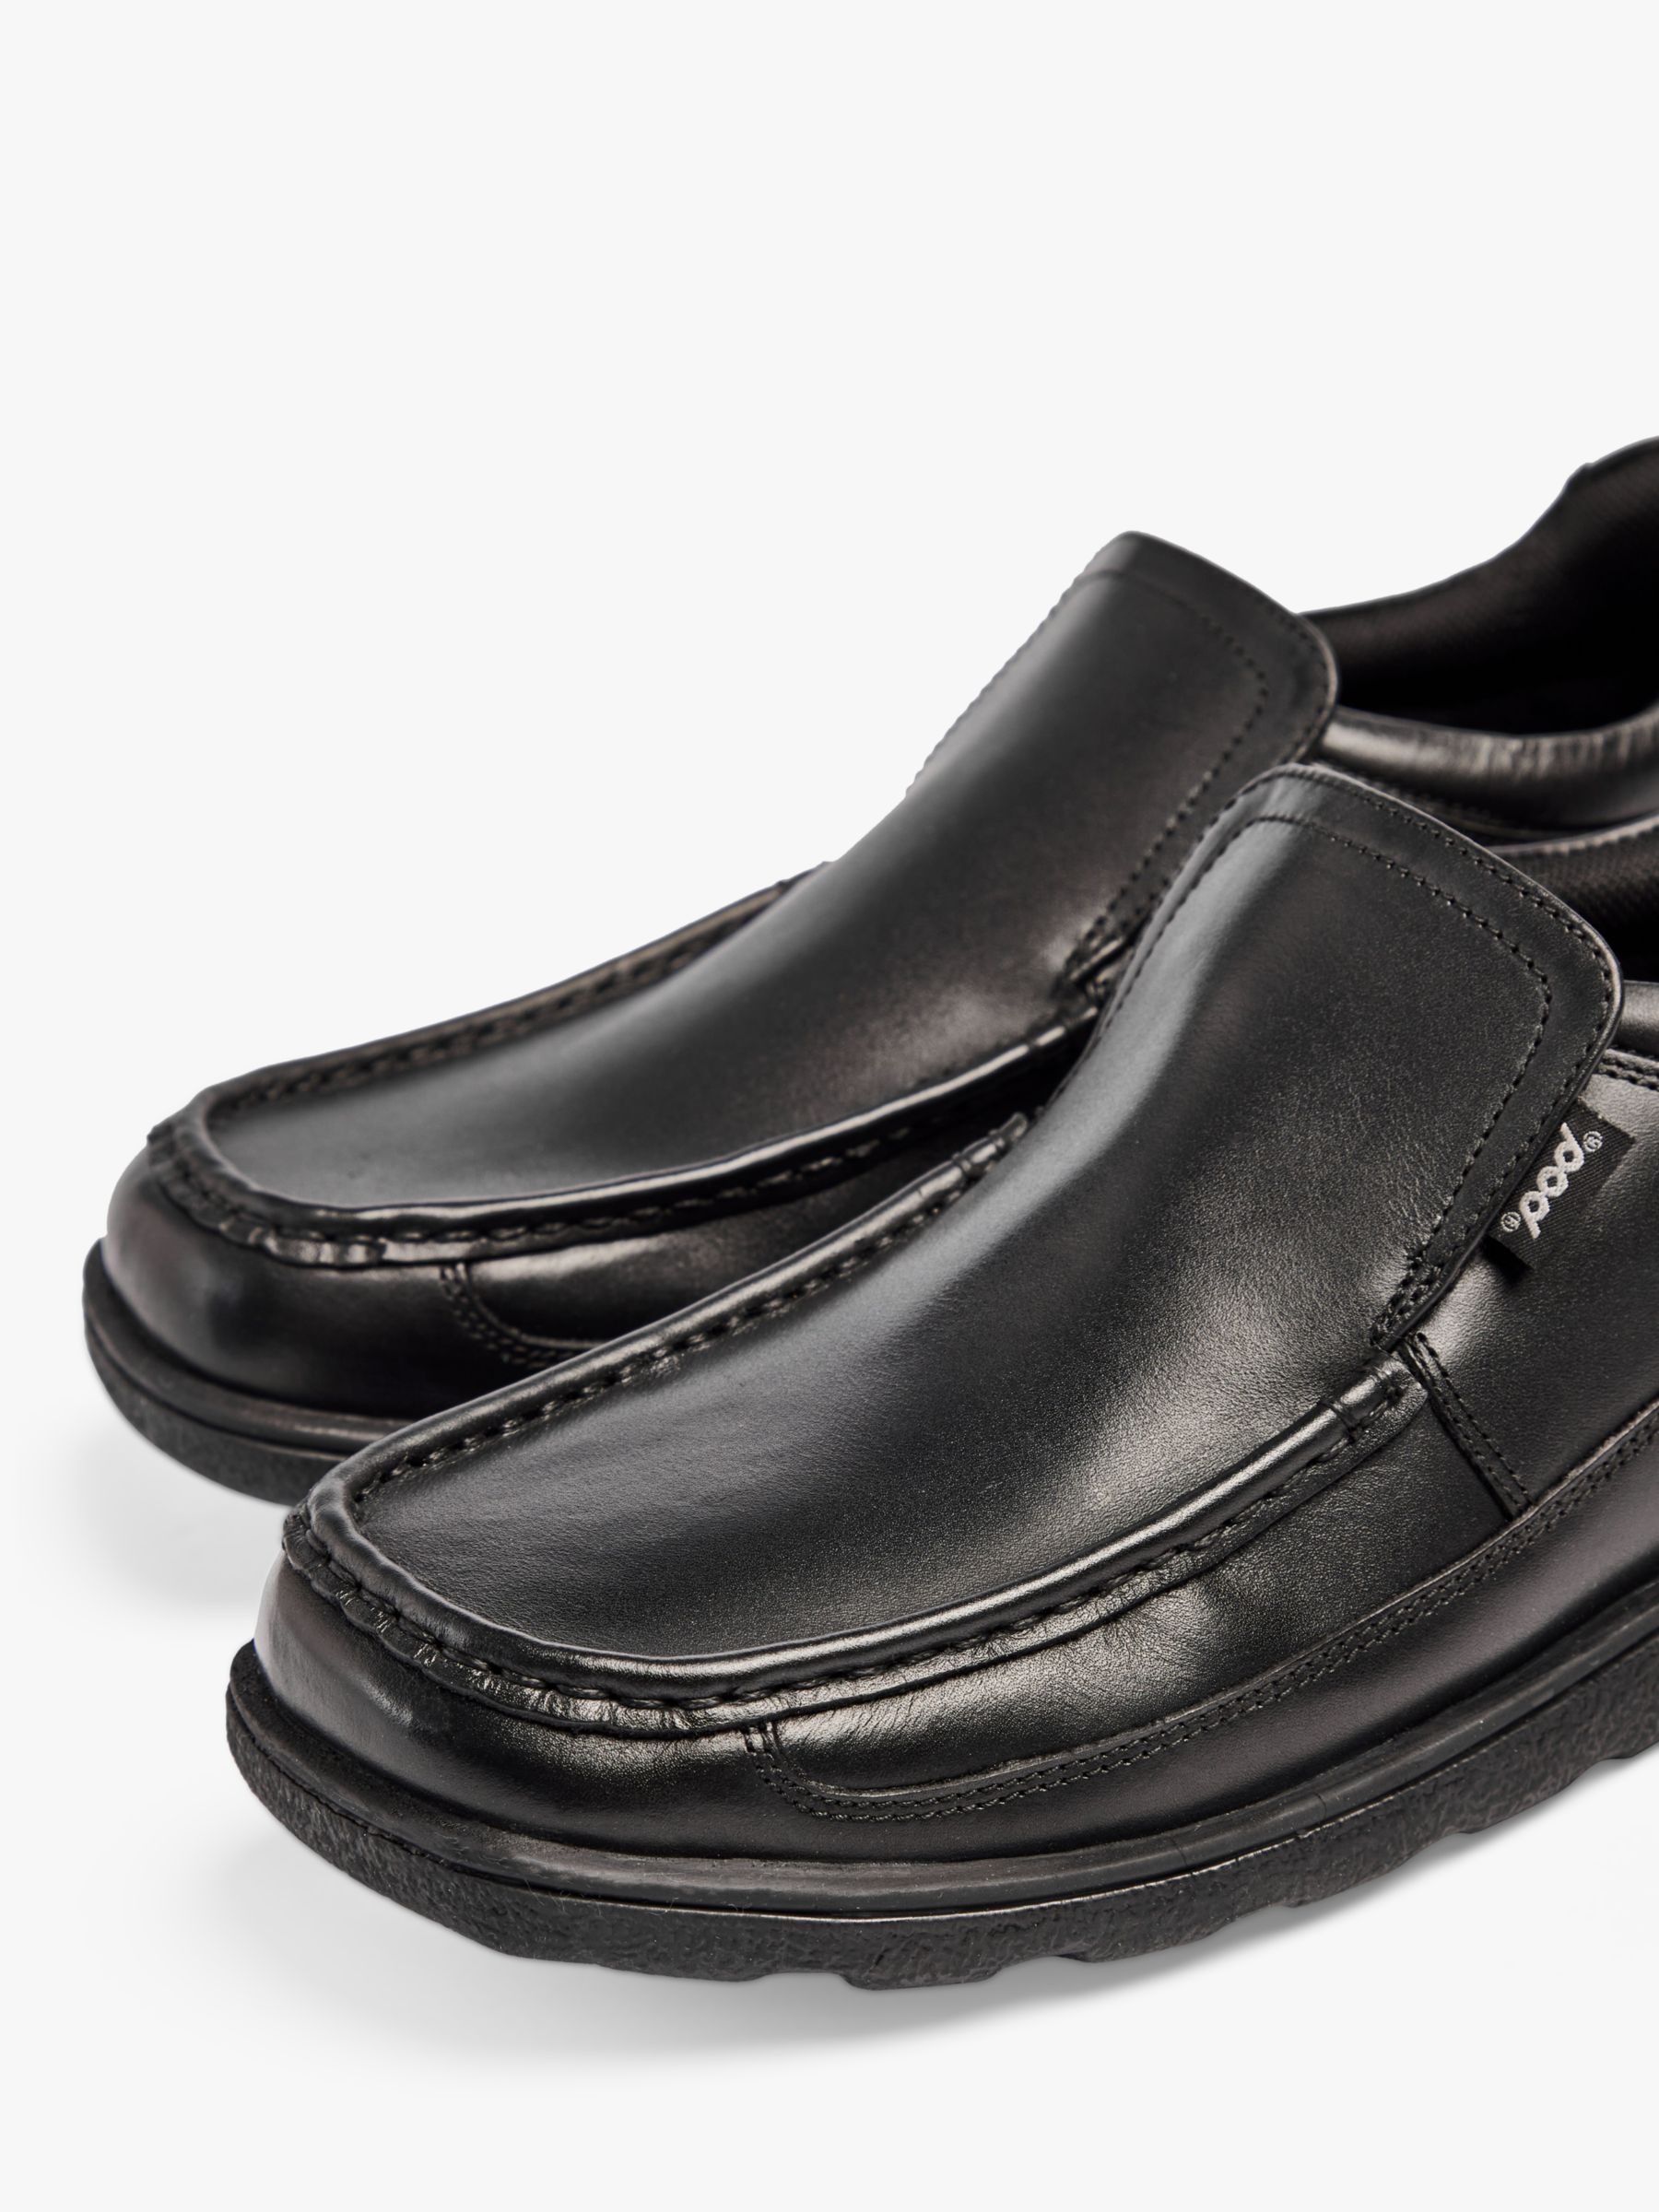 Pod Kids' Jay Leather School Shoes, Black, 3